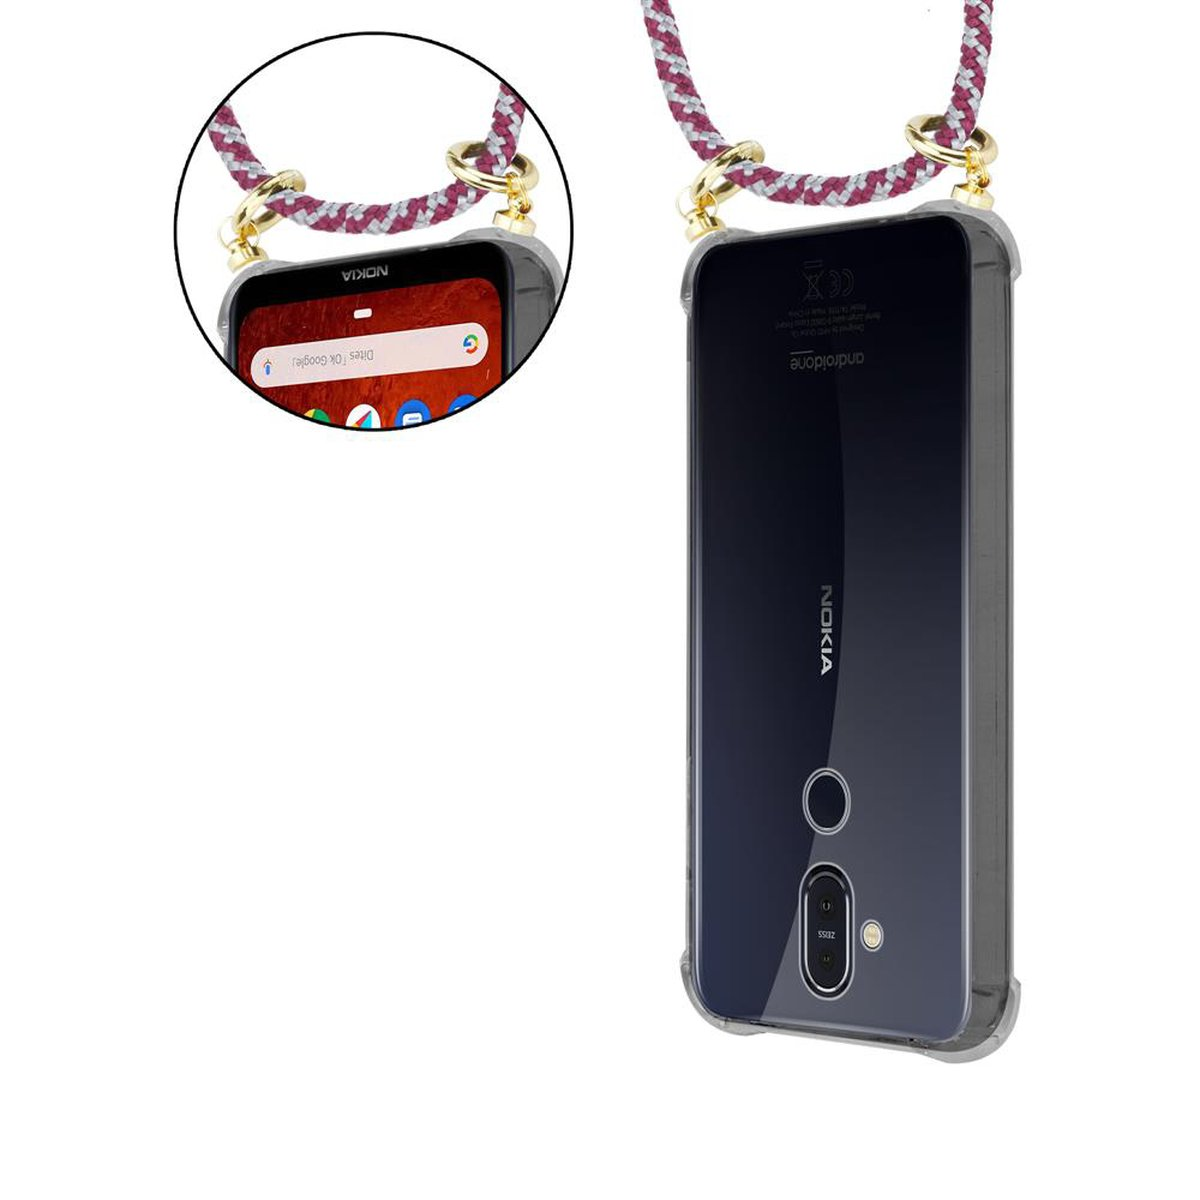 CADORABO Handy Kette mit Nokia, ROT Gold WEIß Kordel 8.1, Backcover, Ringen, Band und Hülle, abnehmbarer